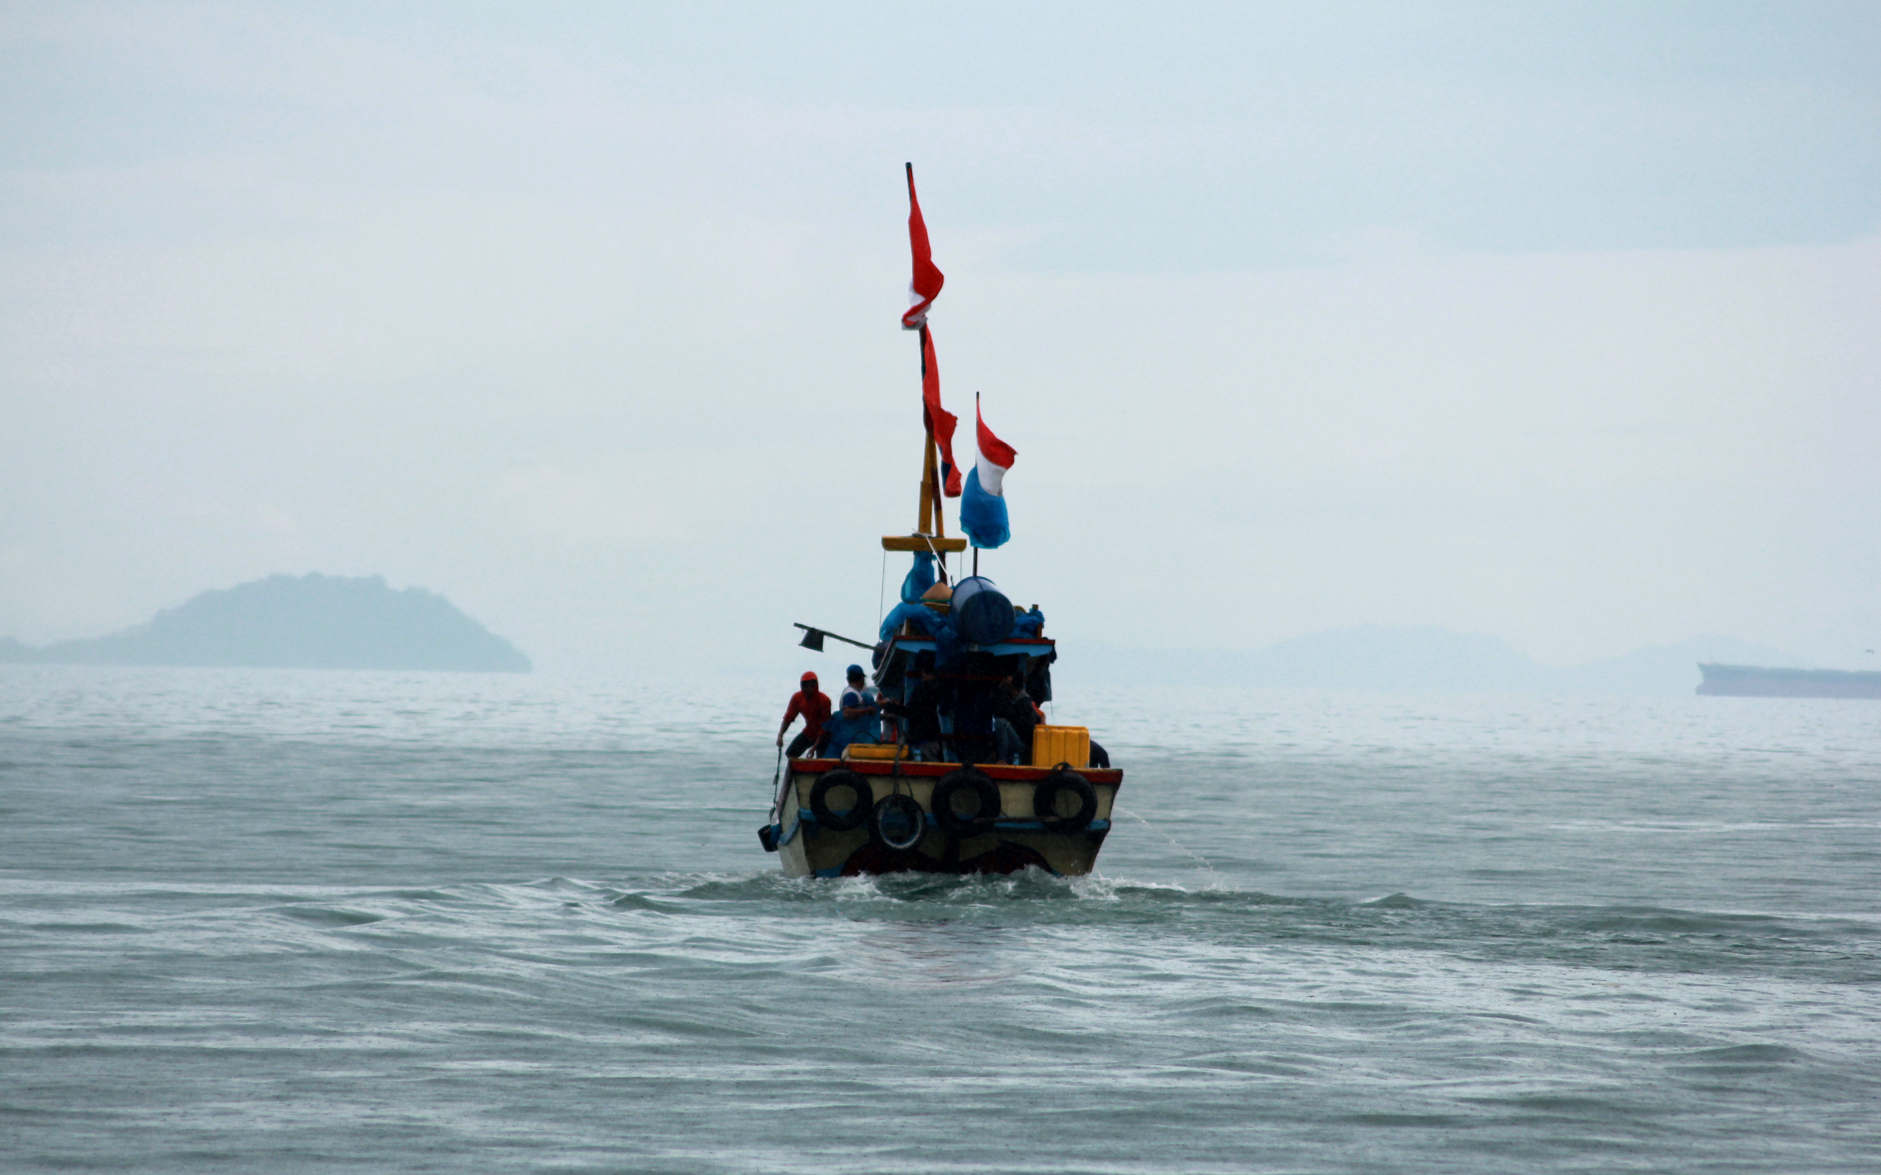 Dalam kondisi hujan, sebuah kapal nelayan tetap berlayar untuk mencari ikan di perairan Teluk Lampung. (Lampungnews/El Shinta).